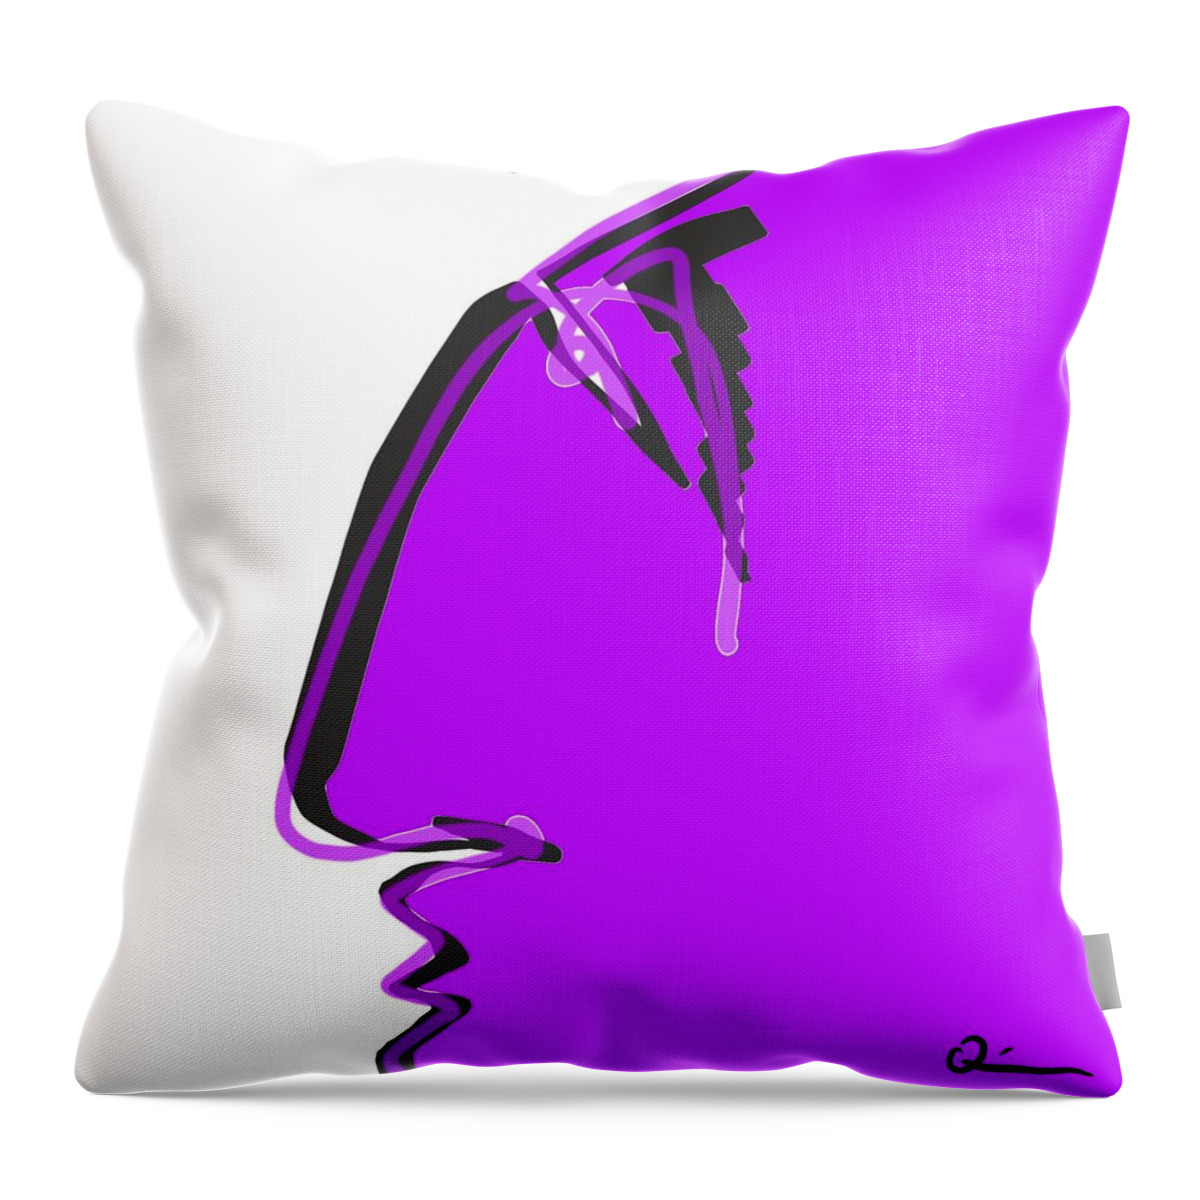 Purple Throw Pillow featuring the digital art Sad Grape by Jeffrey Quiros